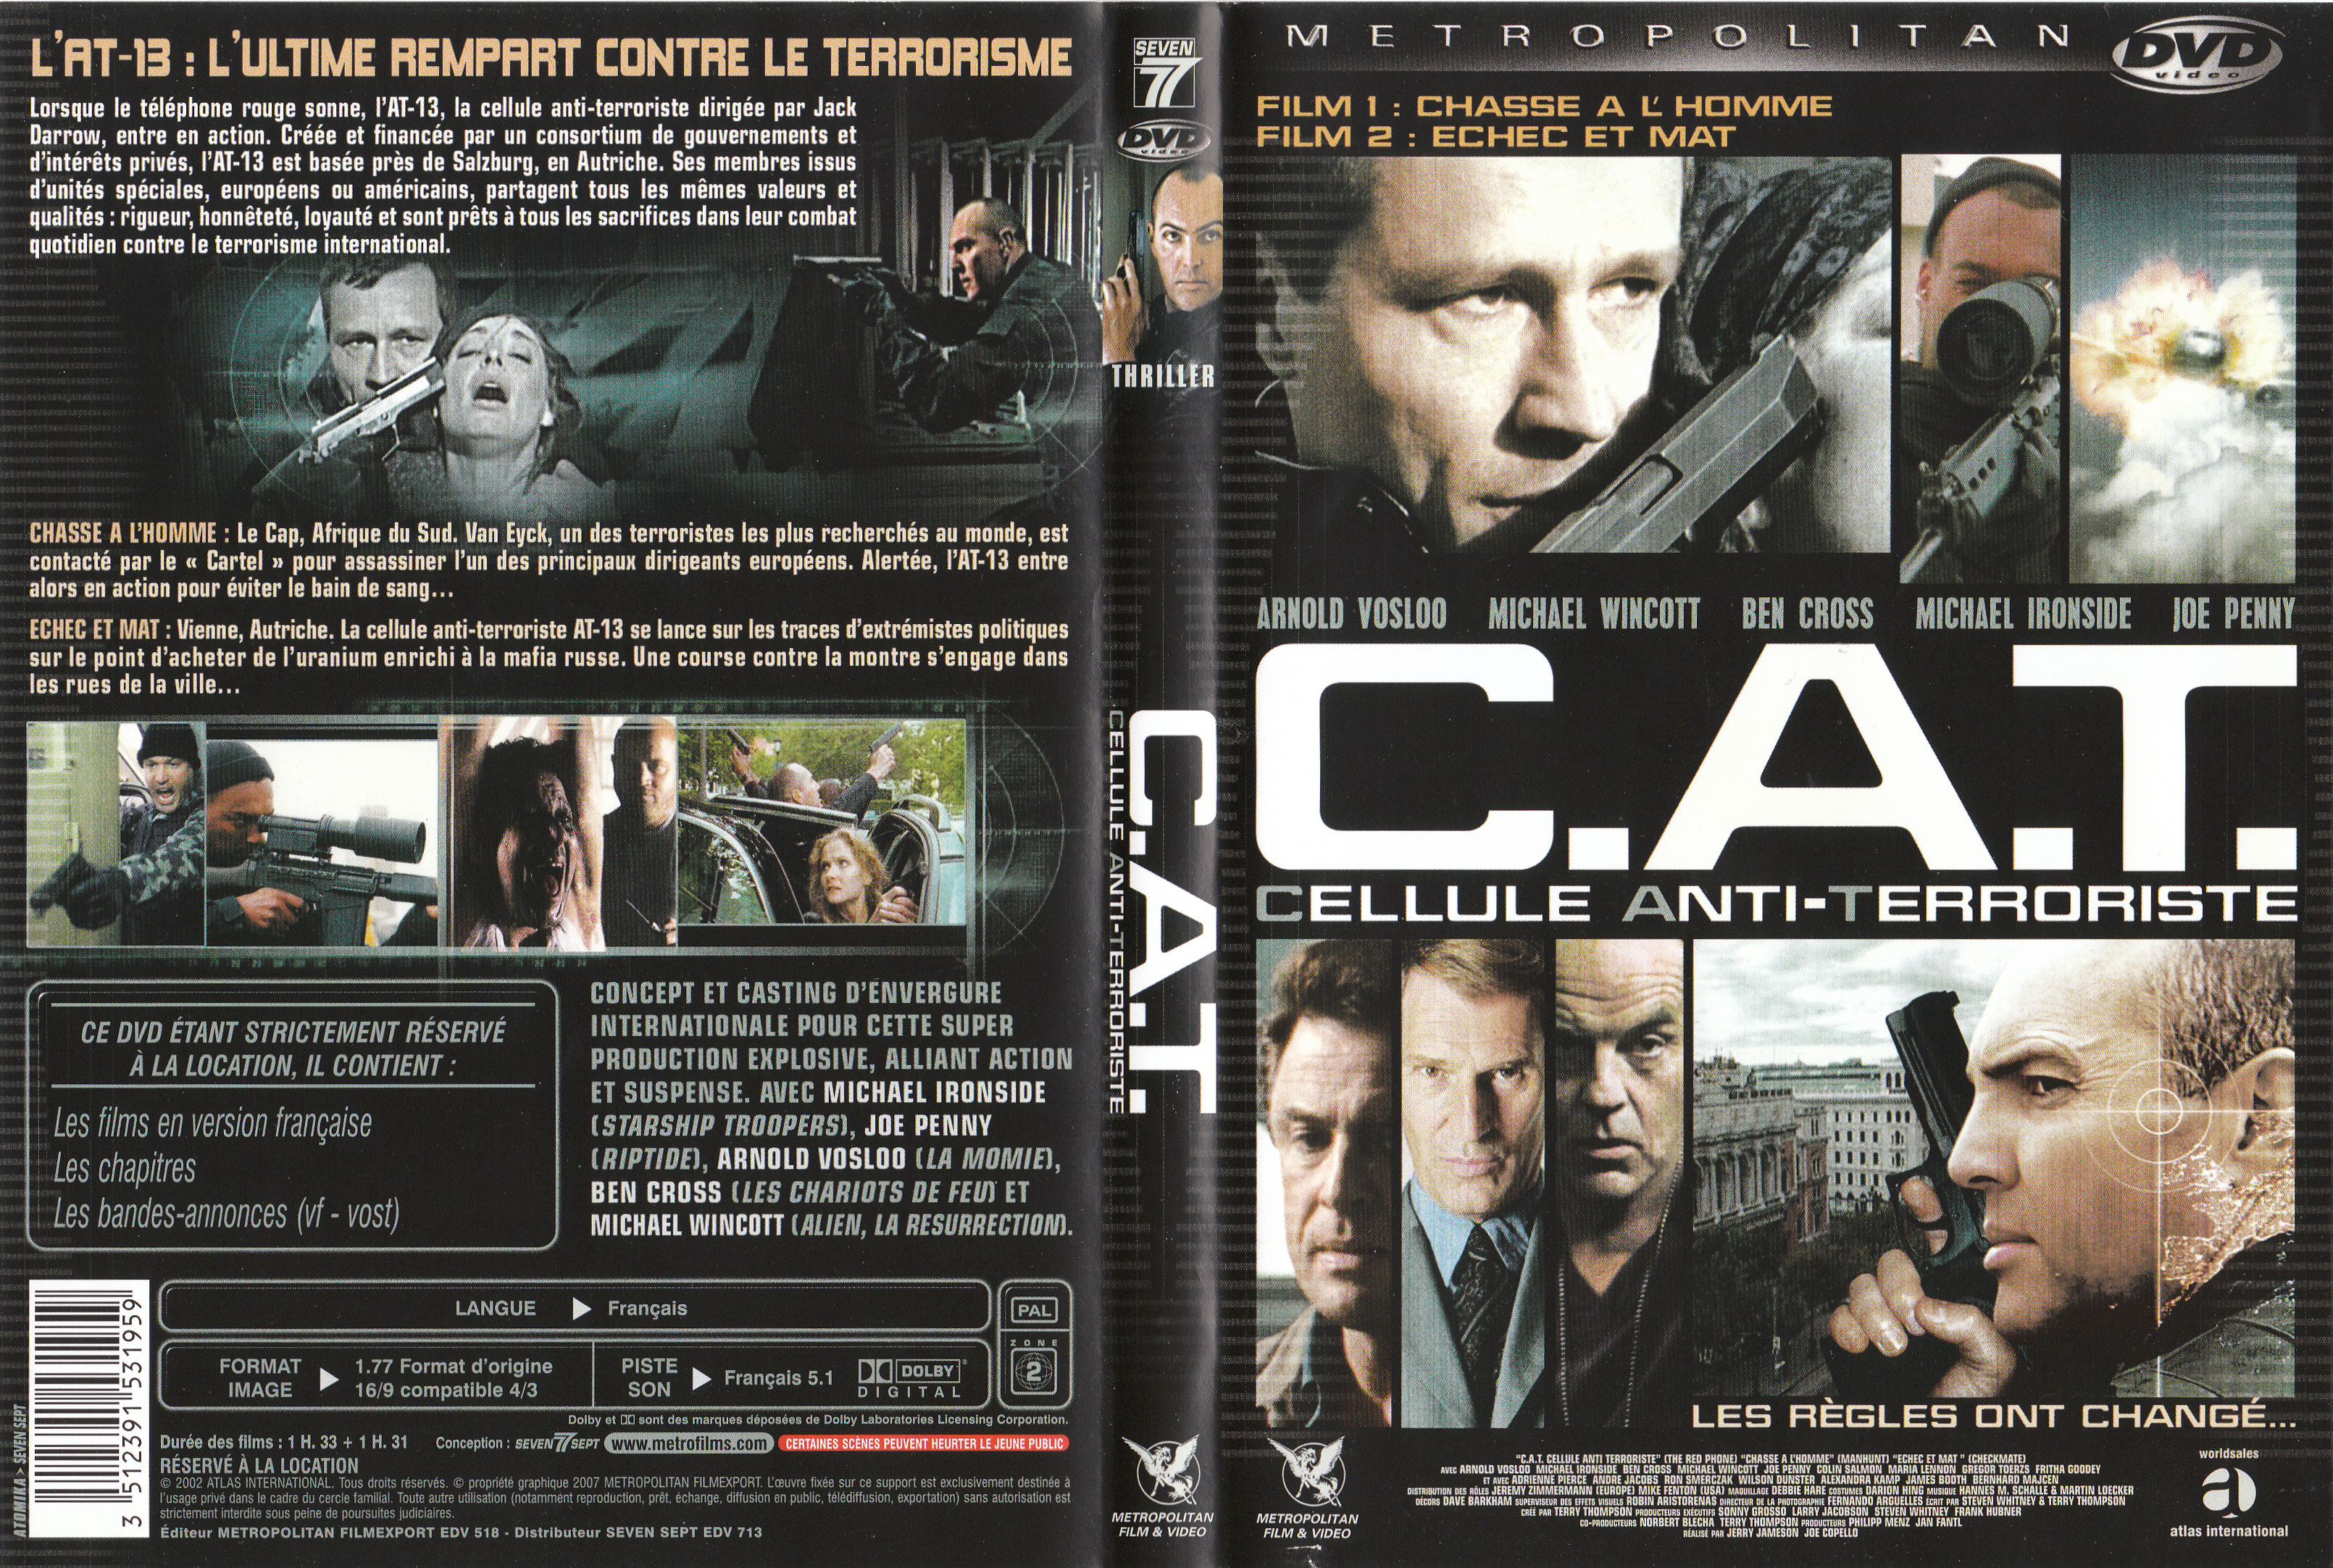 Jaquette DVD C.A.T. Cellule anti terroriste